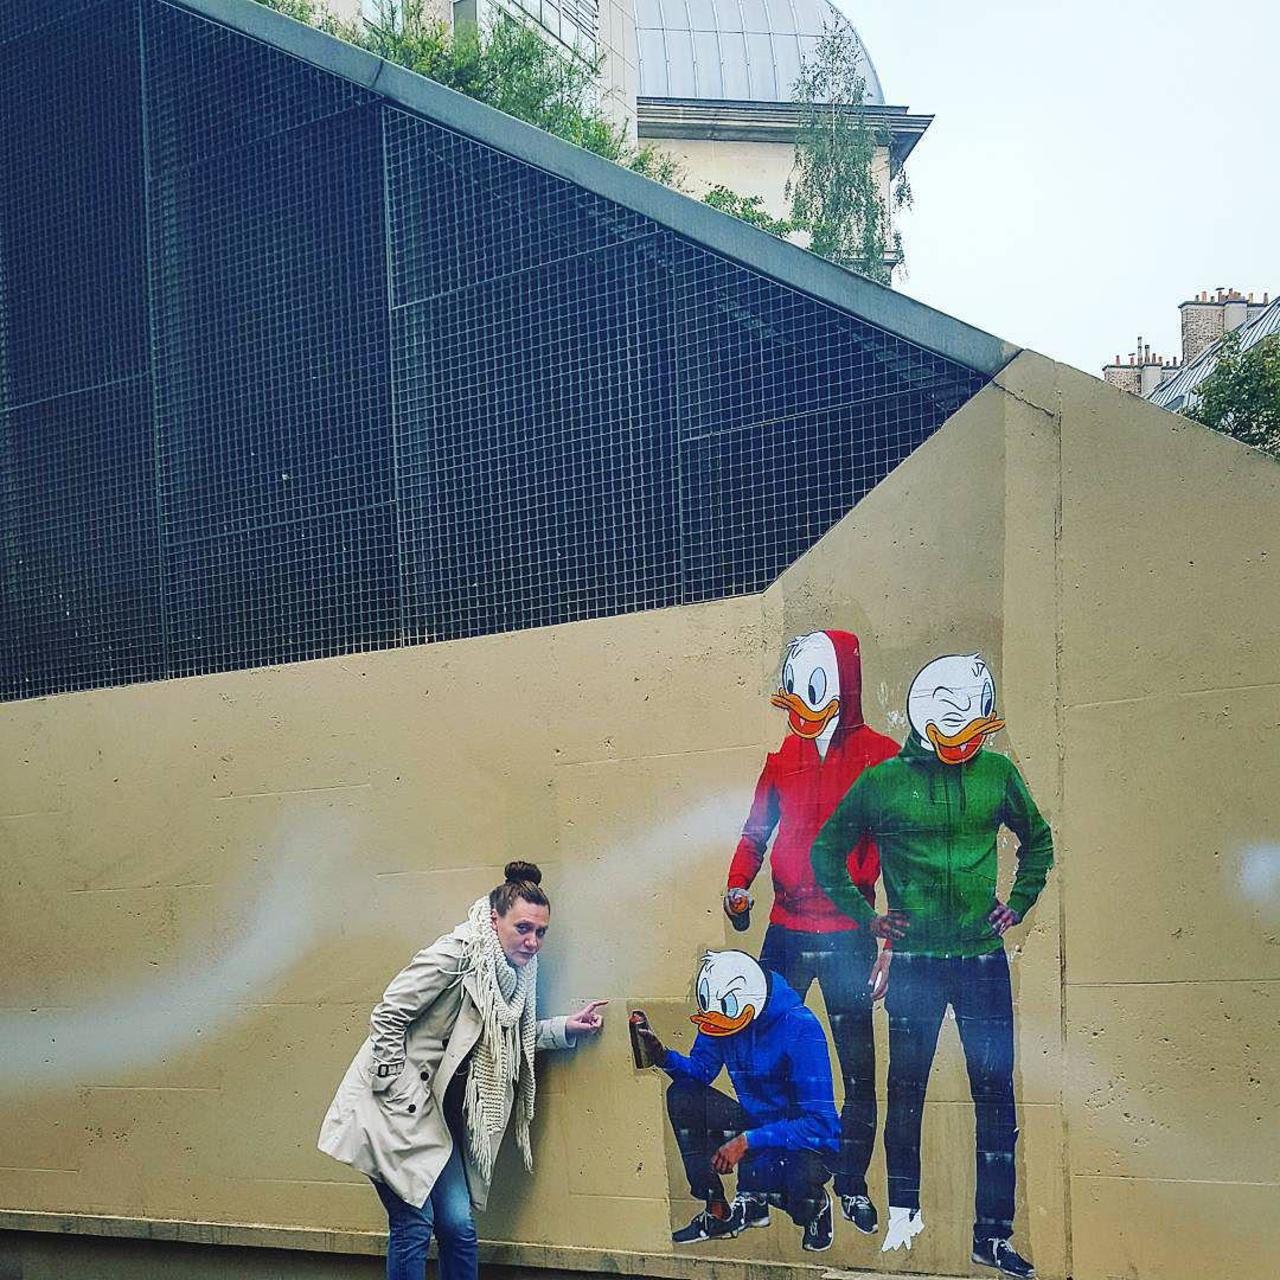 #Paris #graffiti photo by @beabookingstories http://ift.tt/1jNwWJV #StreetArt http://t.co/TXAfqPZjLo